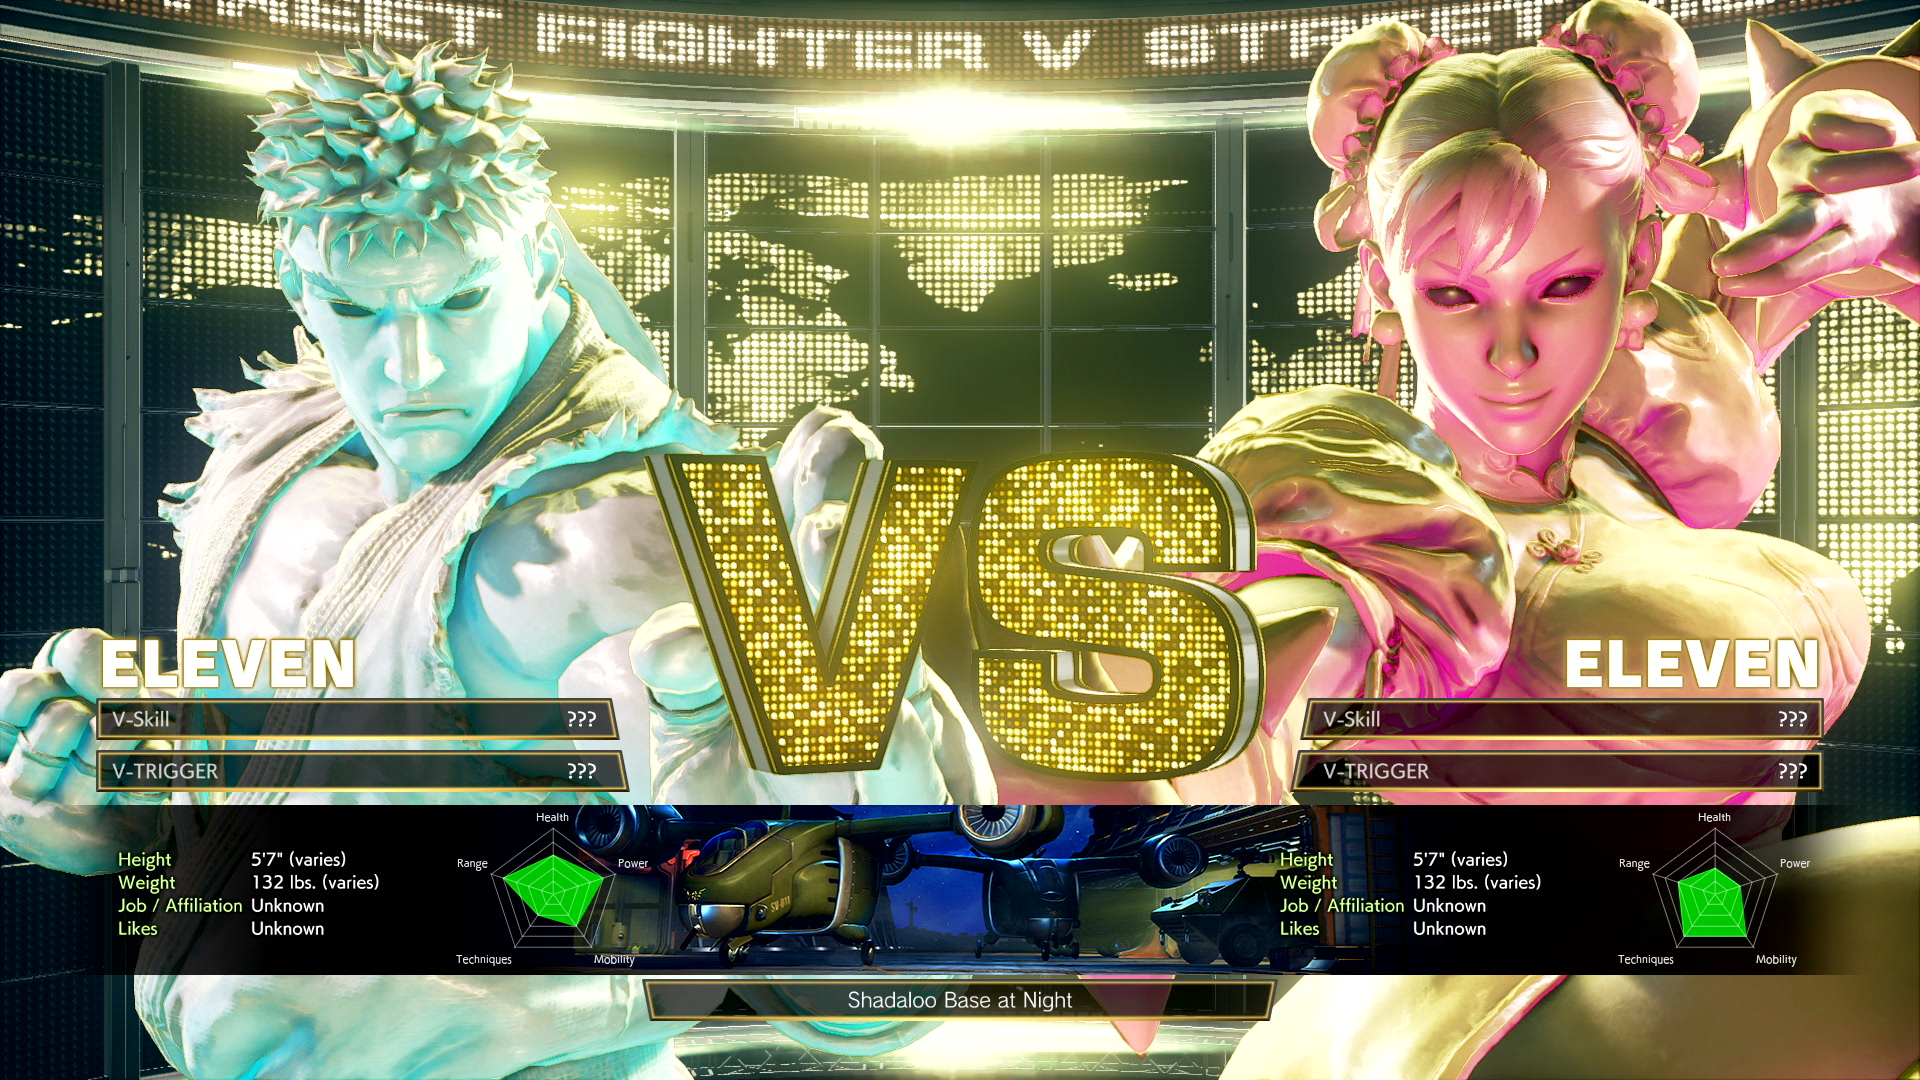 Street Fighter V: Champion Edition Fall Update Livestream Set for